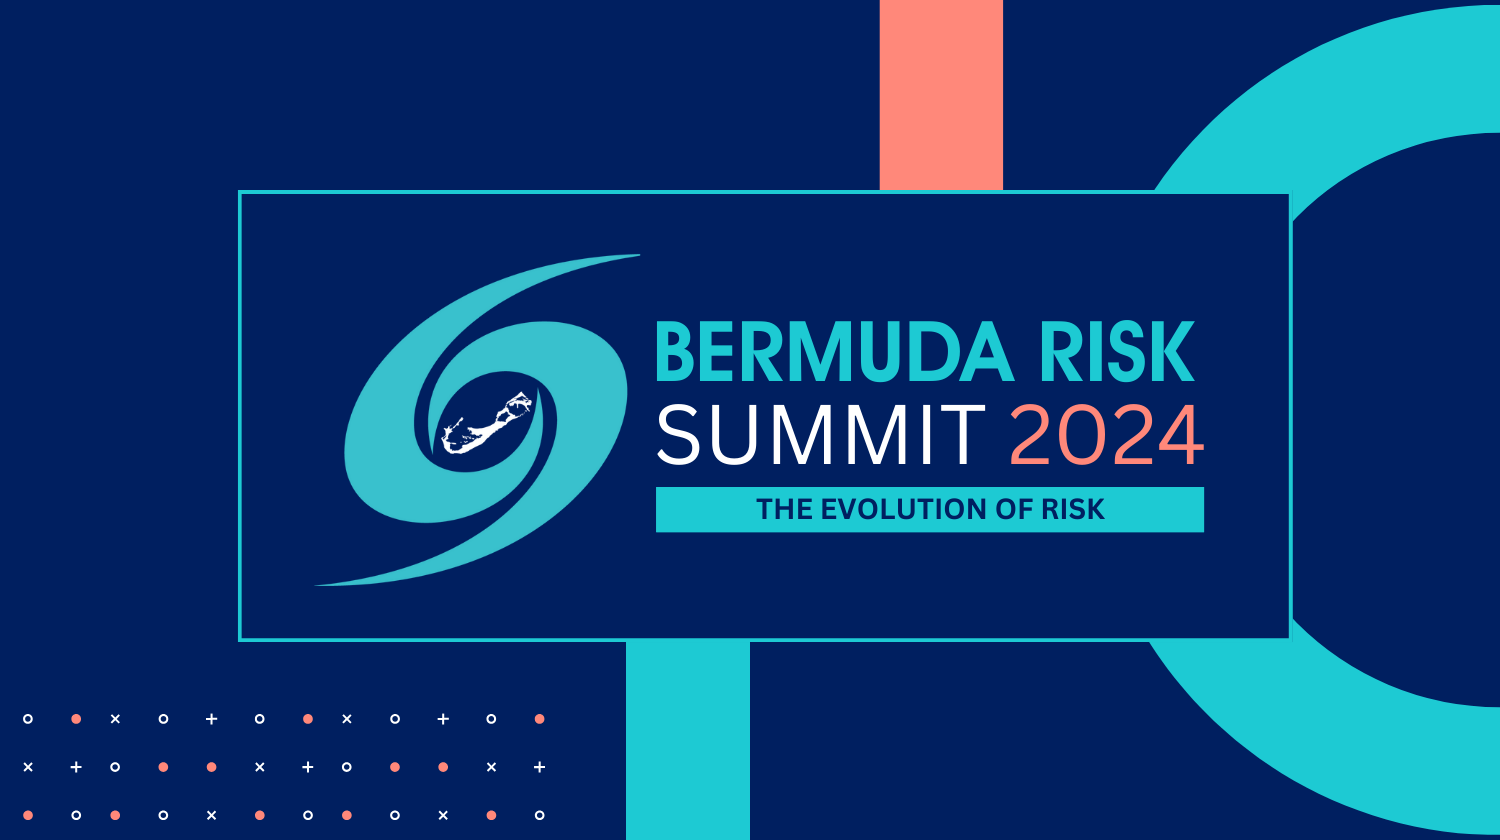 Amazon’s Global Head of Corporate Risk to Speak at 2024 Bermuda Risk Summit